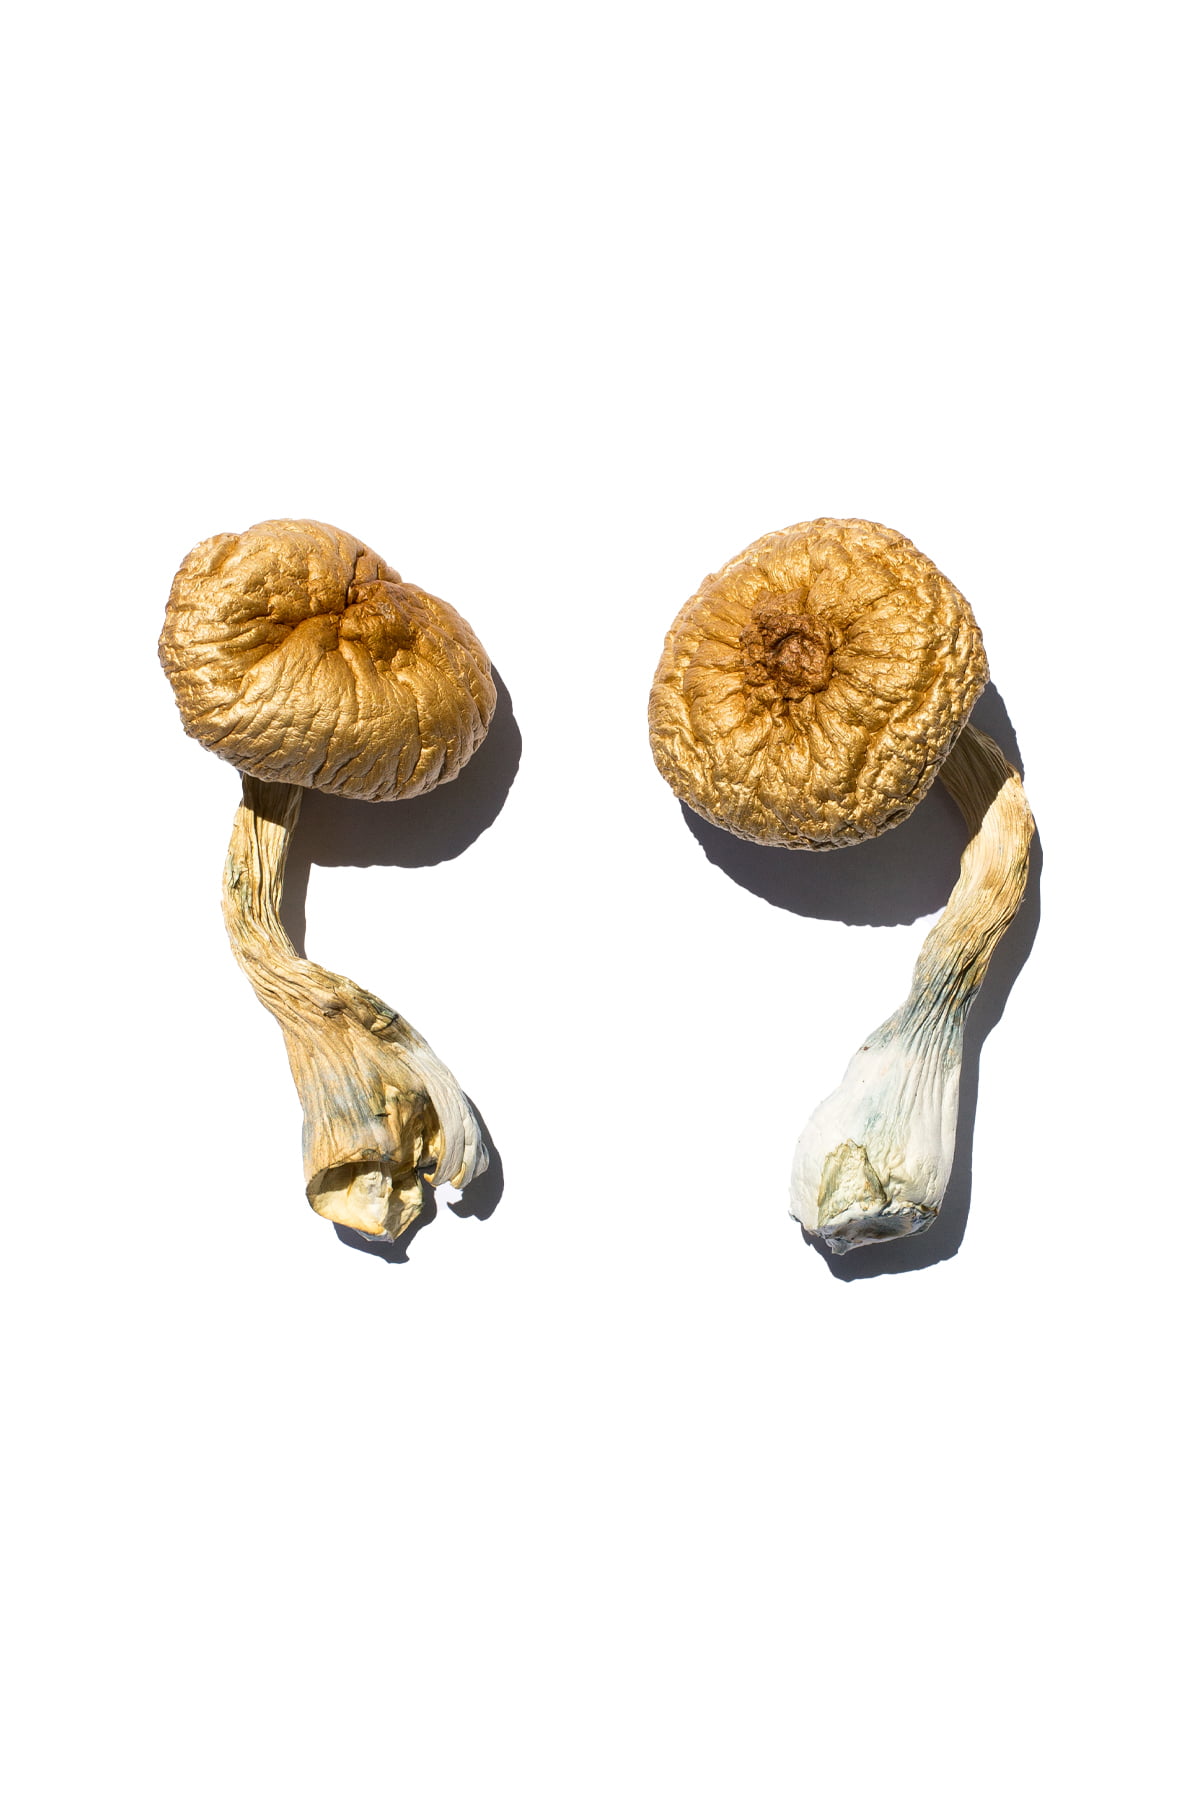 Buy Cambodian Gold magic mushrooms